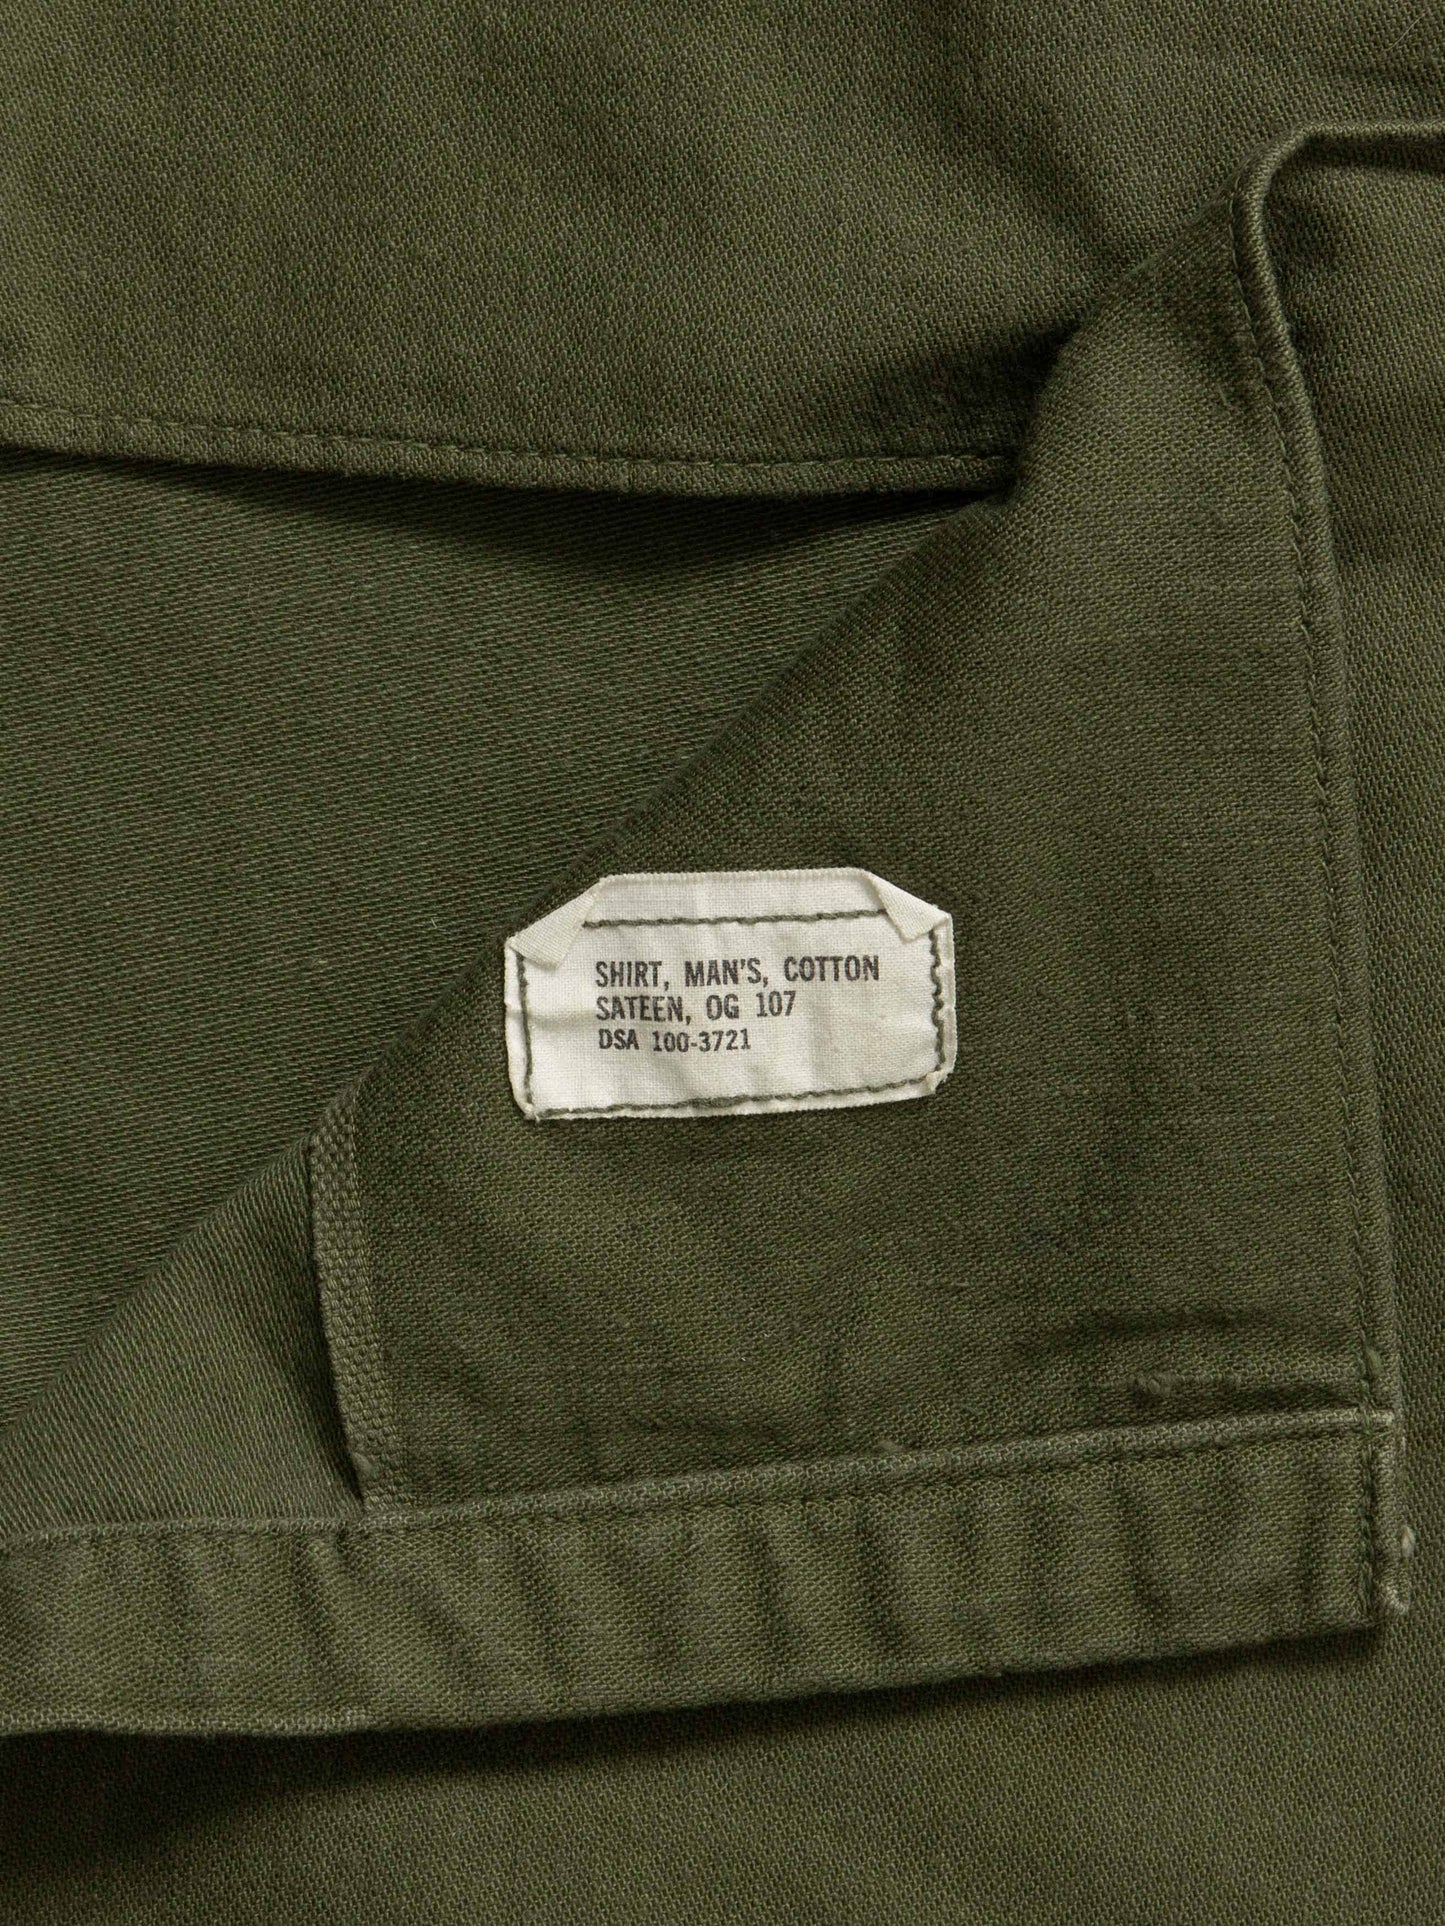 Vtg US Army Fatigue Shirt (S)